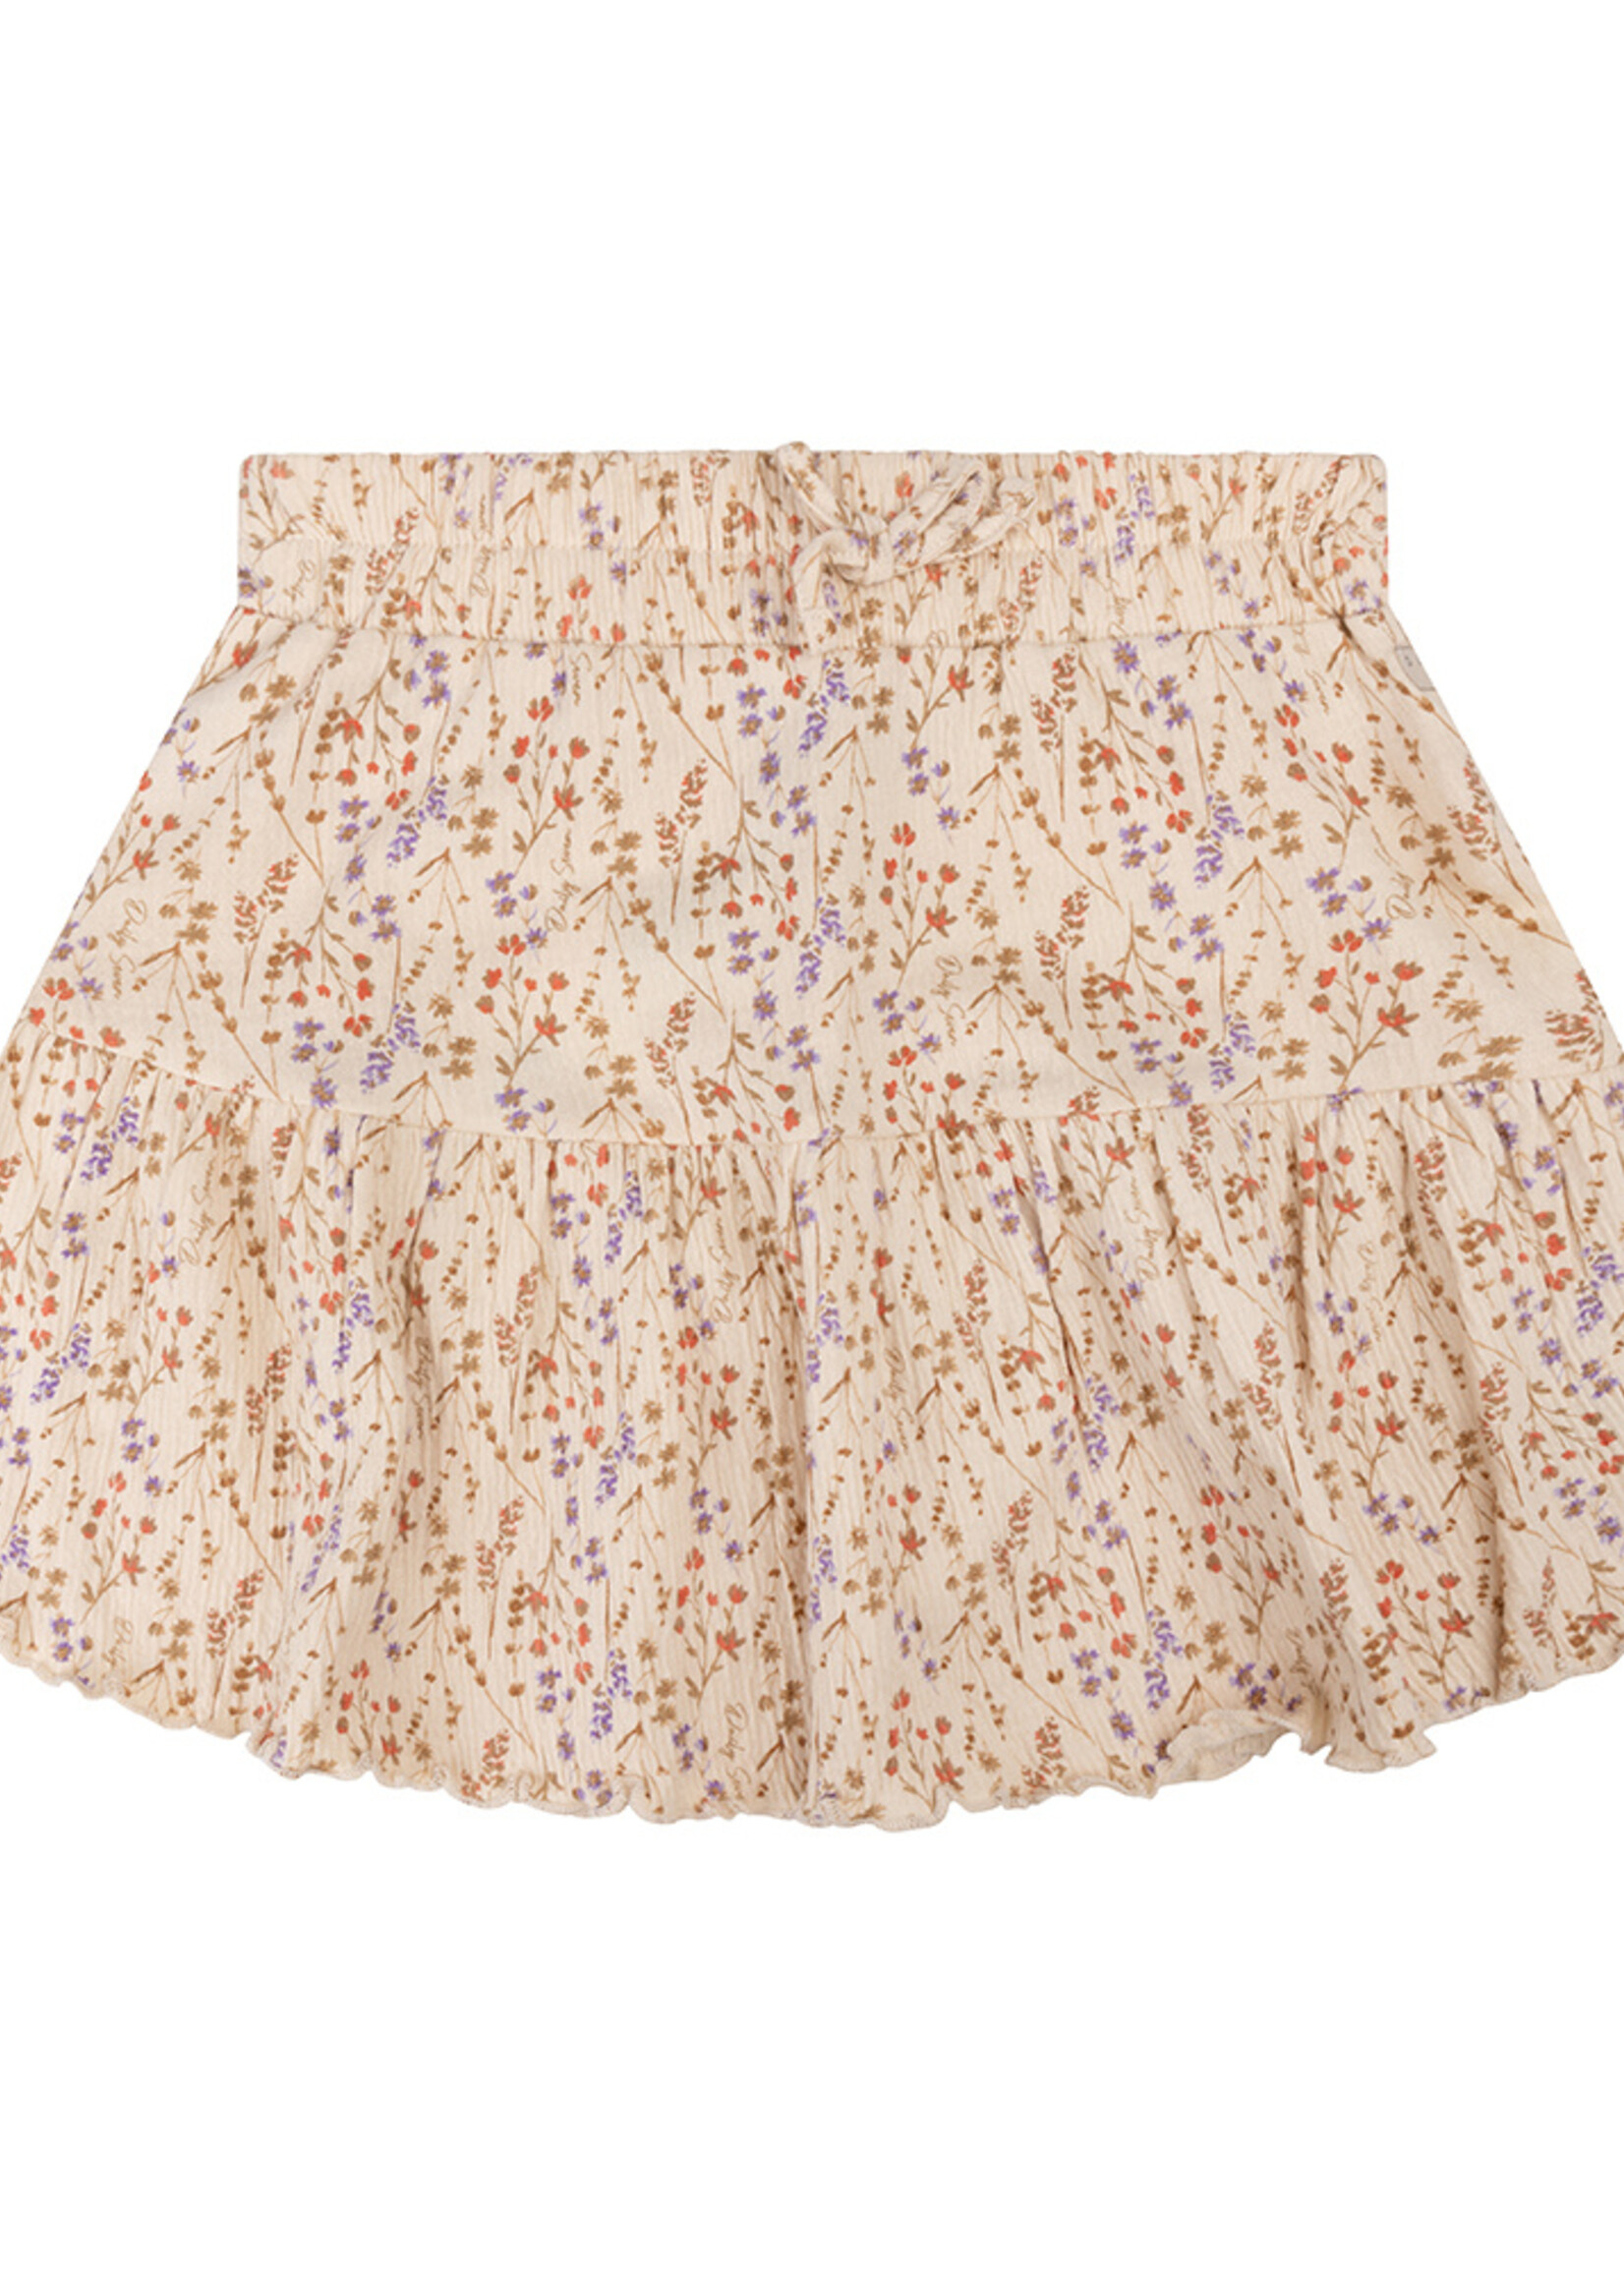 Daily7 Organic Skirt Structure Mille Fleur, Sandshell